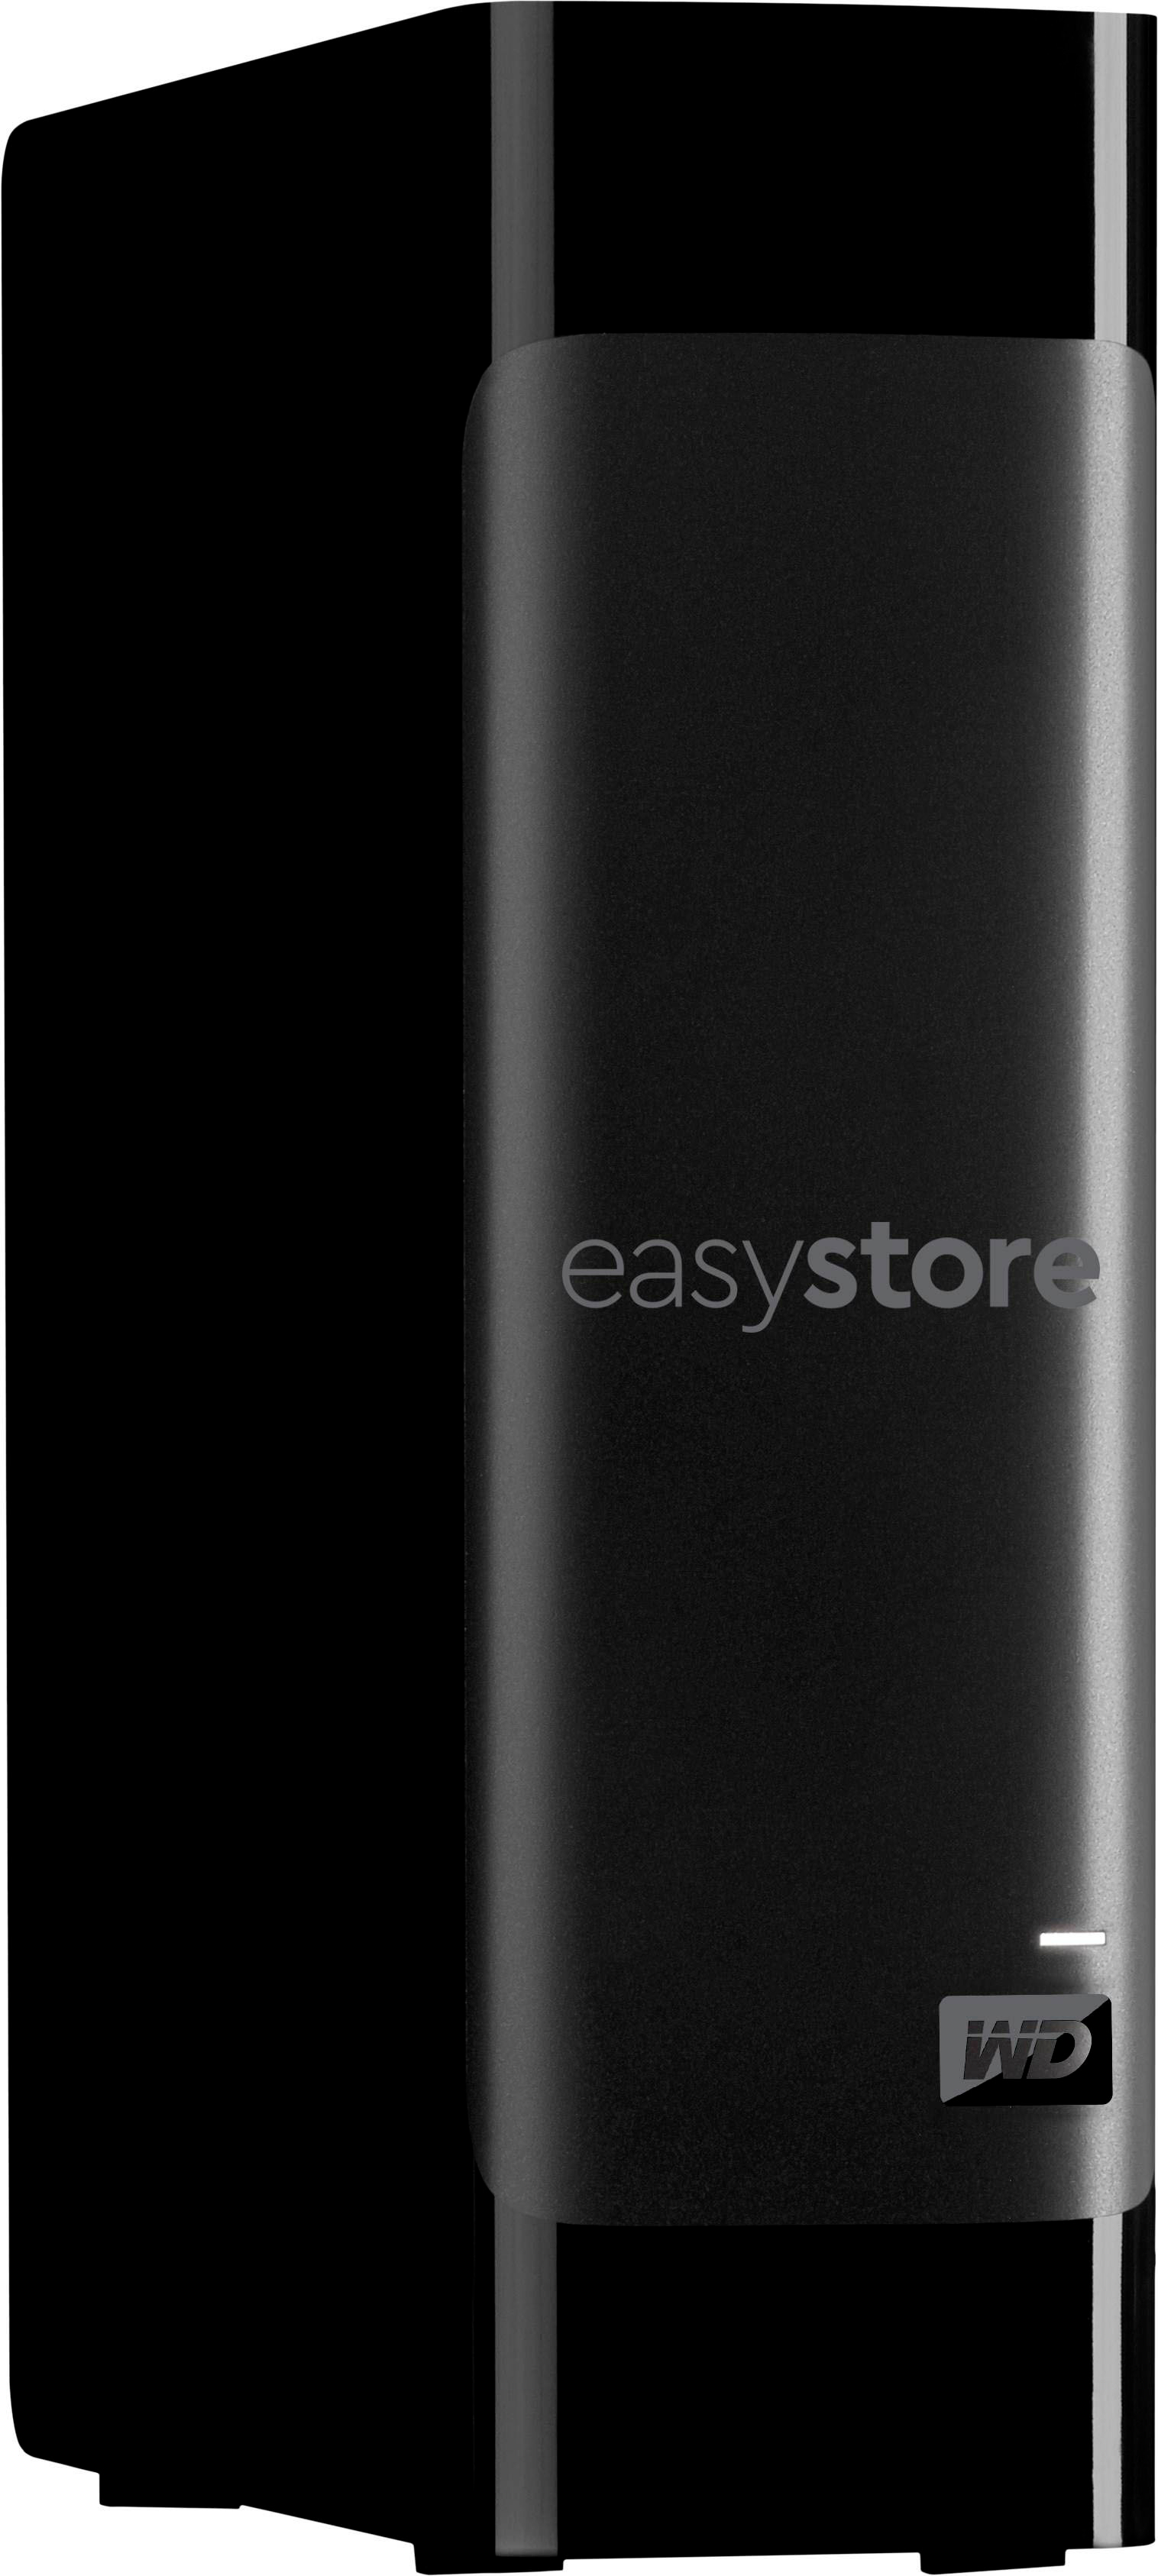 WD easystore USB 3.0 18TB External HDD $250